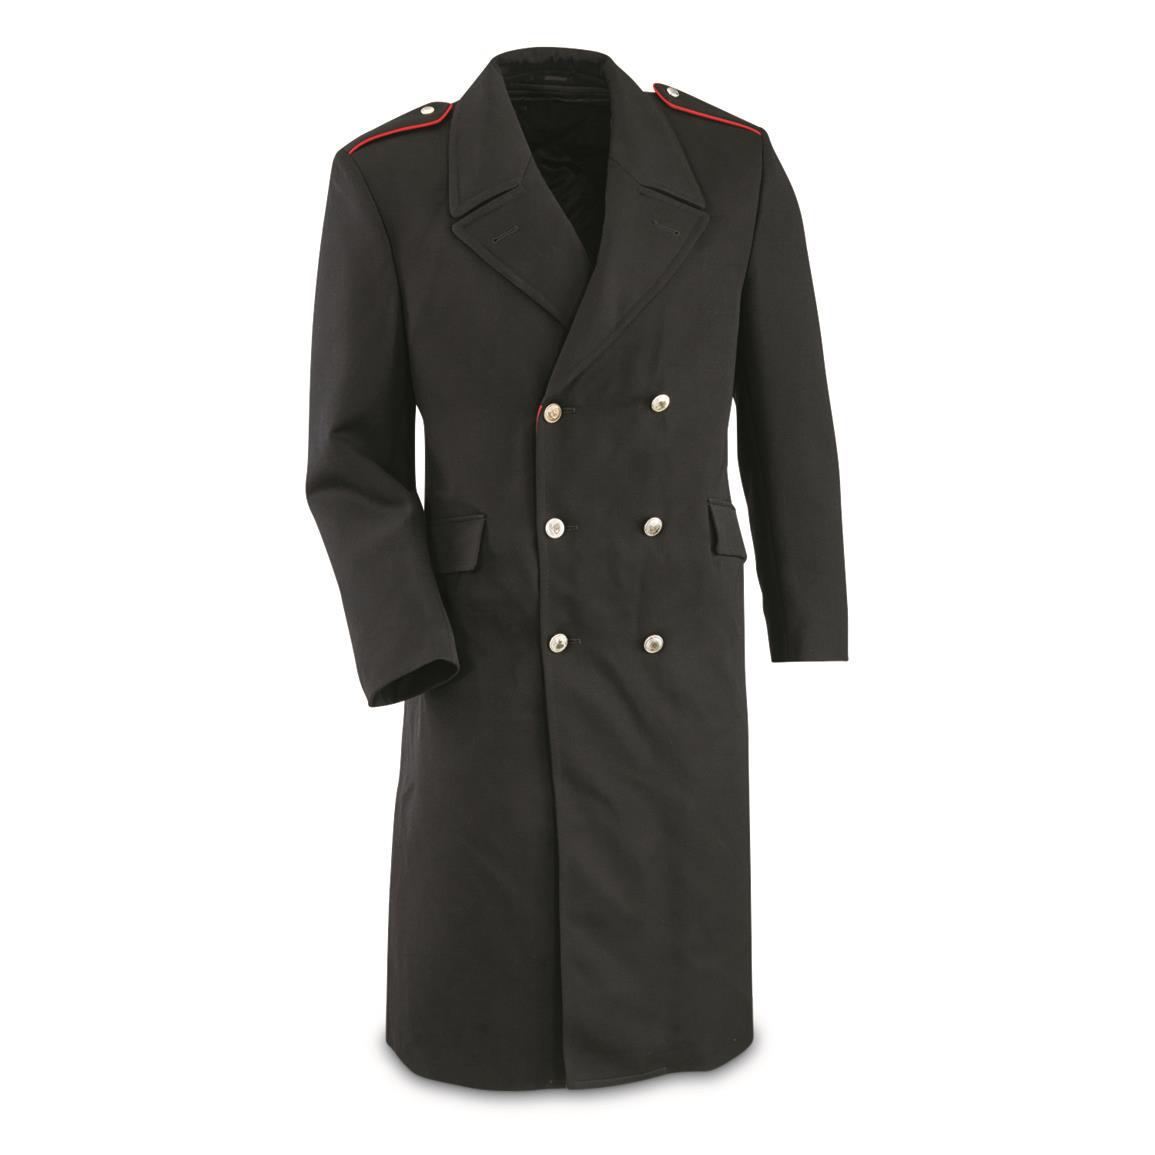 Italian Military Police Surplus Carabinieri Overcoat with Liner, New, Black